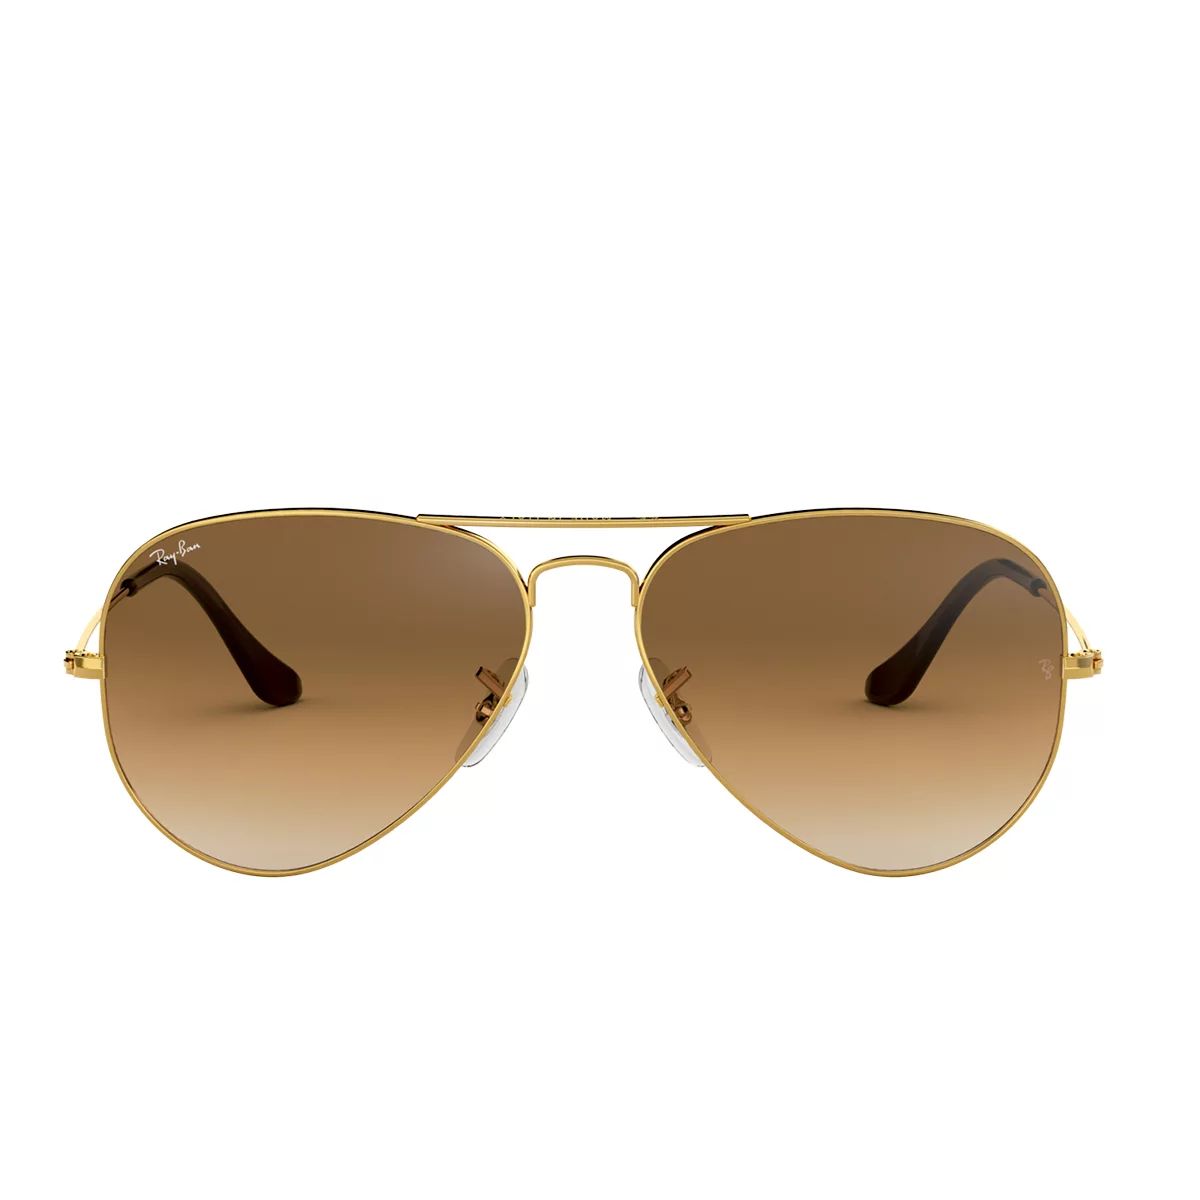 Ray Ban Men's/Women's Aviator Sunglasses, Gradient | Atmosphere